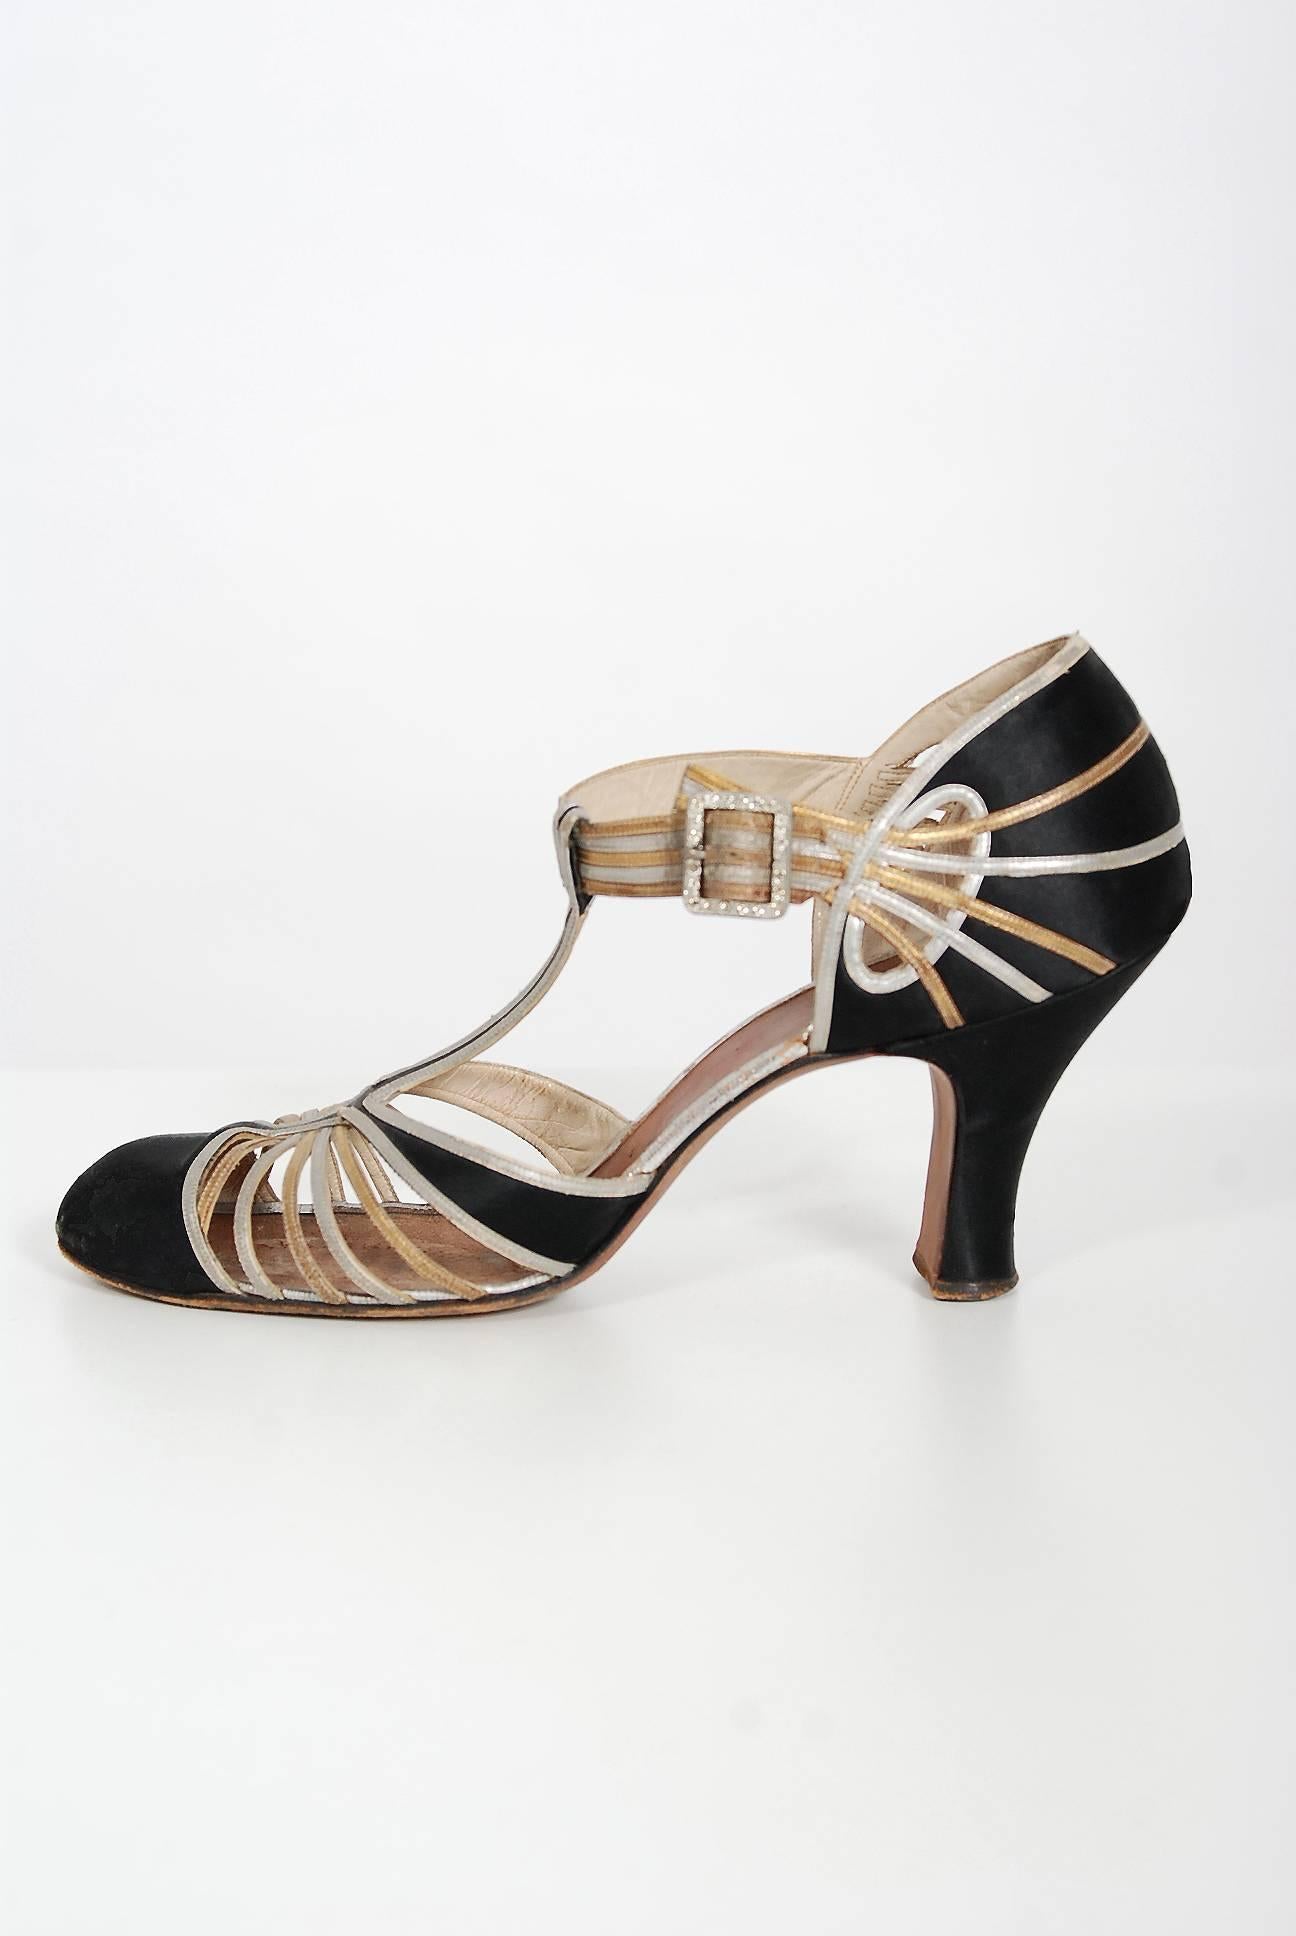 1920s flapper shoes uk